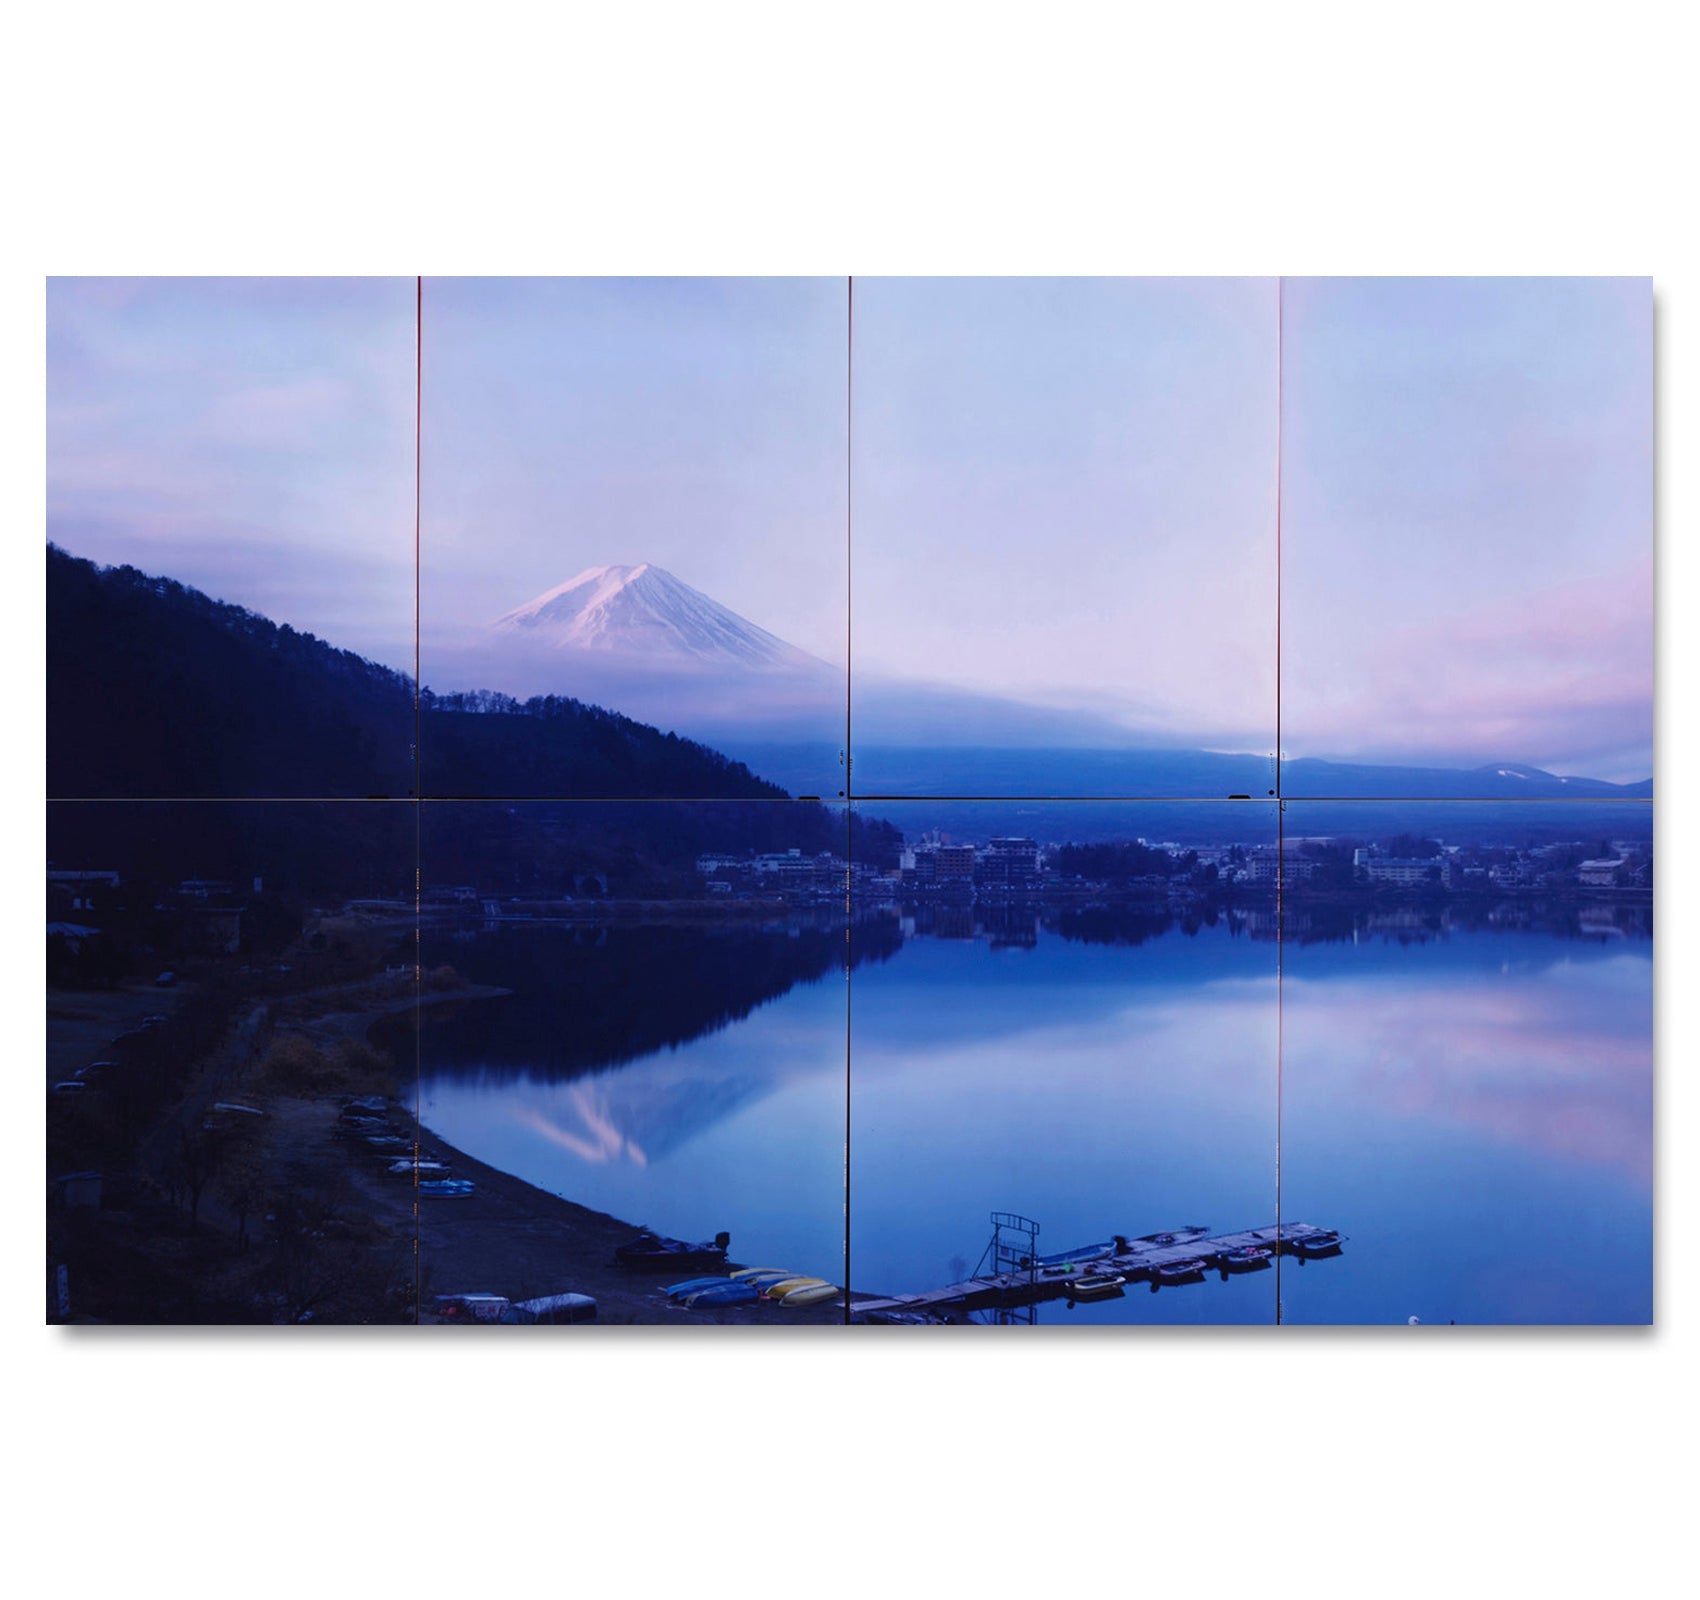 THIRTY-SIX VIEWS OF MOUNT FUJI by Takashi Homma [SIGNED]